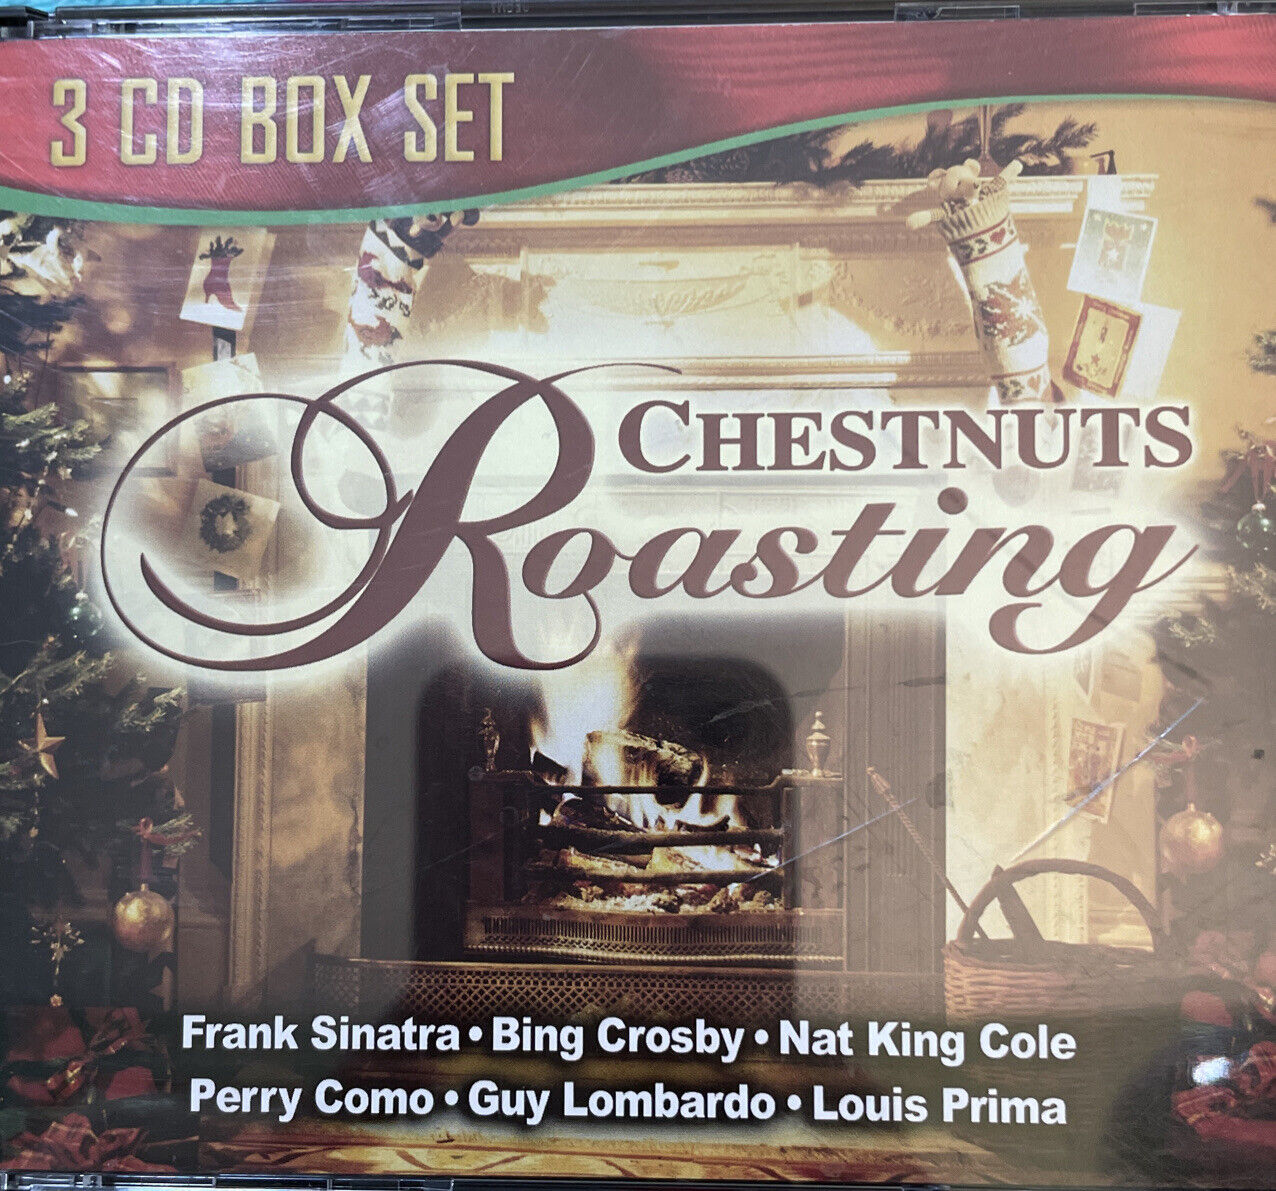 Chestnuts Roasting 3 CD Box Set Brand New Sealed CD Frank Sinatra Bing Crosby